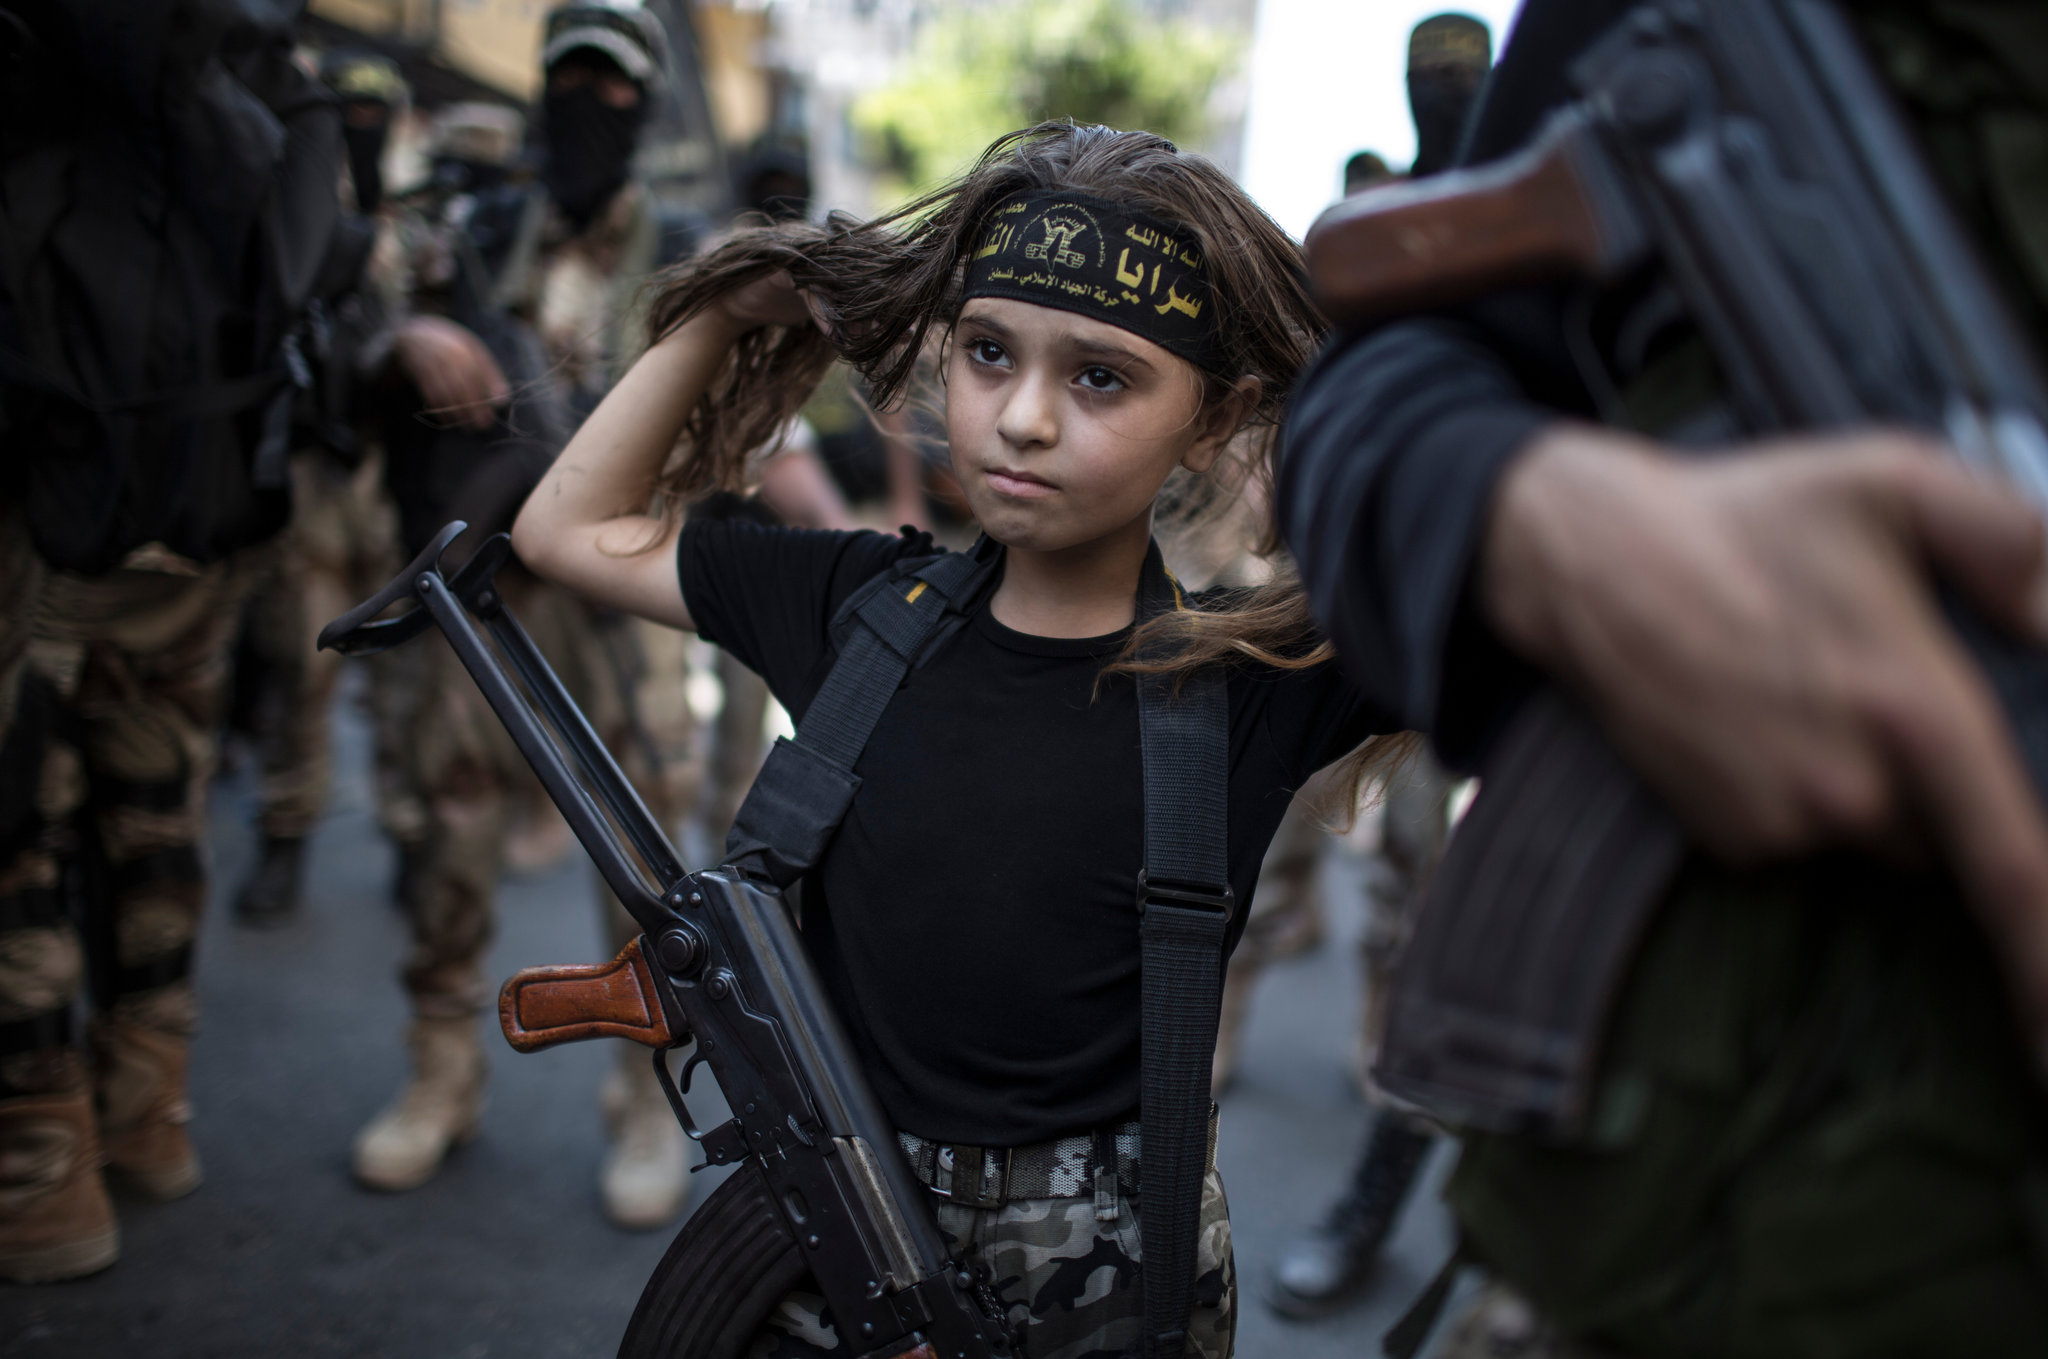 A PALESTINIAN GIRL WITH A KALASHNIKOV RIFLE, AMID MILITANTS IN GAZA CITY